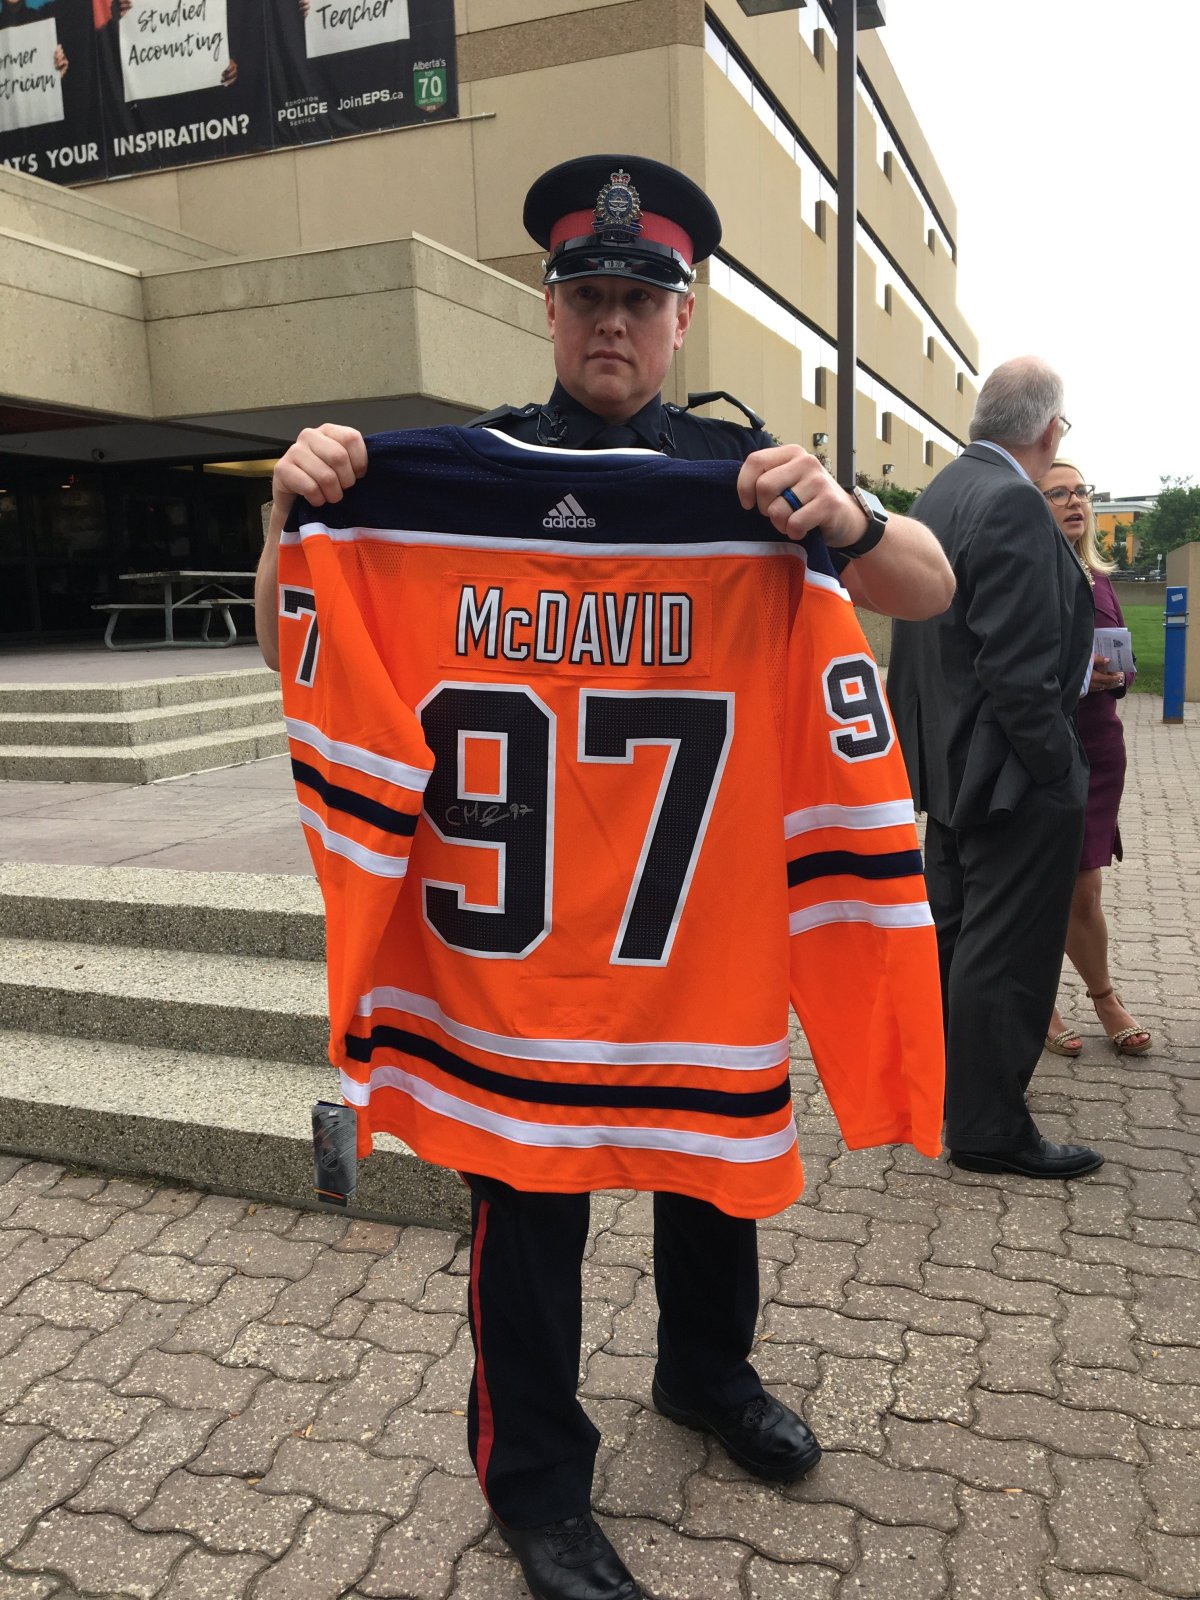 Edmonton Oilers Hockey Mcdavid Shirt - Reallgraphics